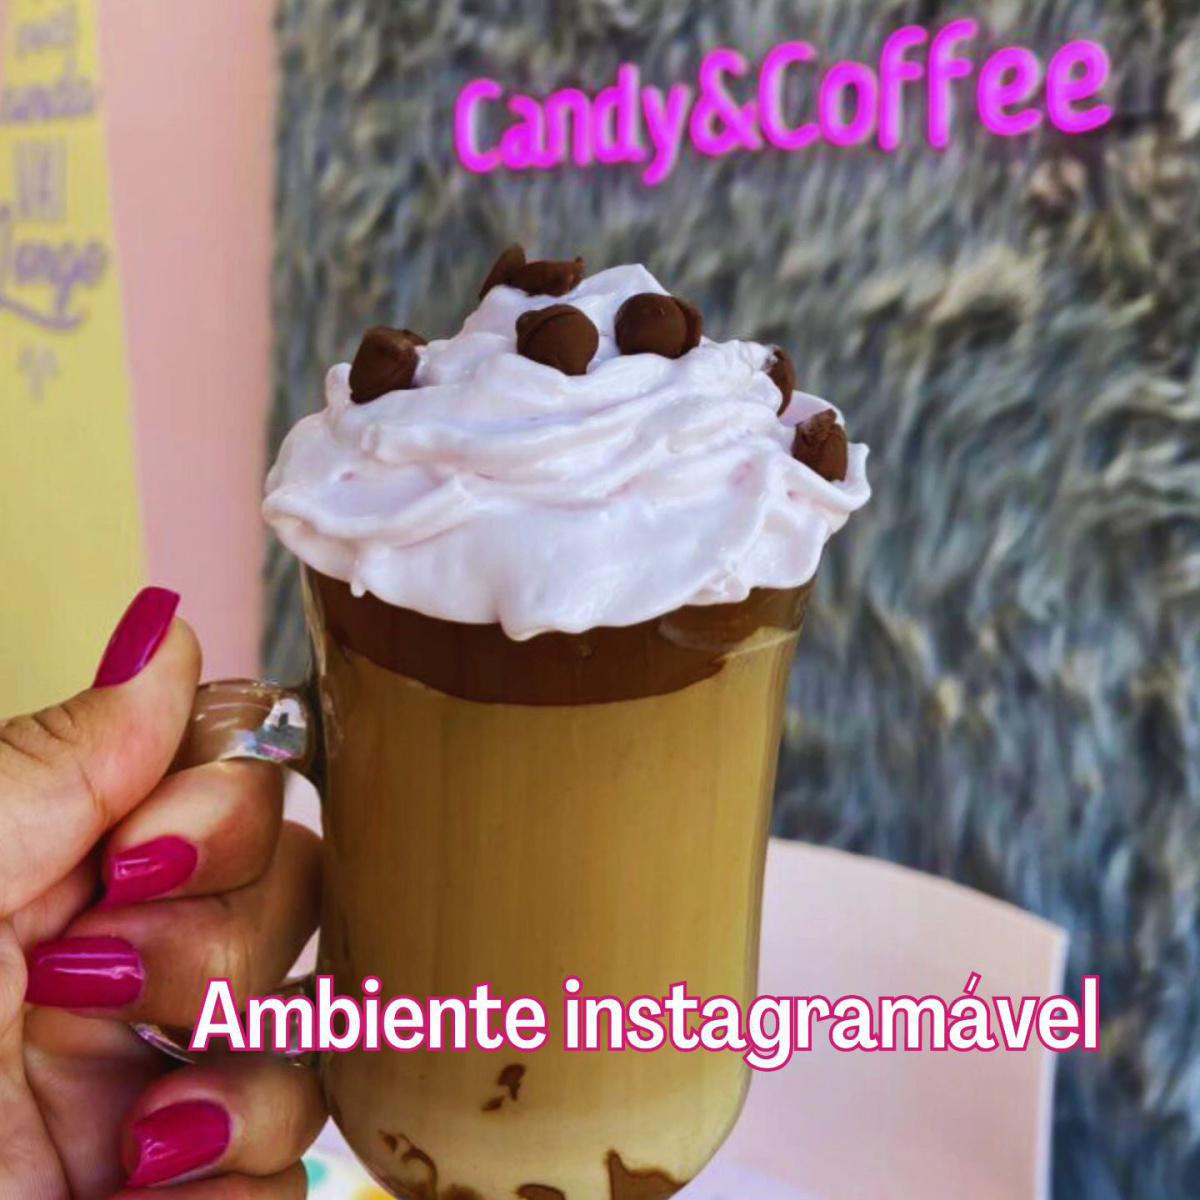 Candy & Coffee